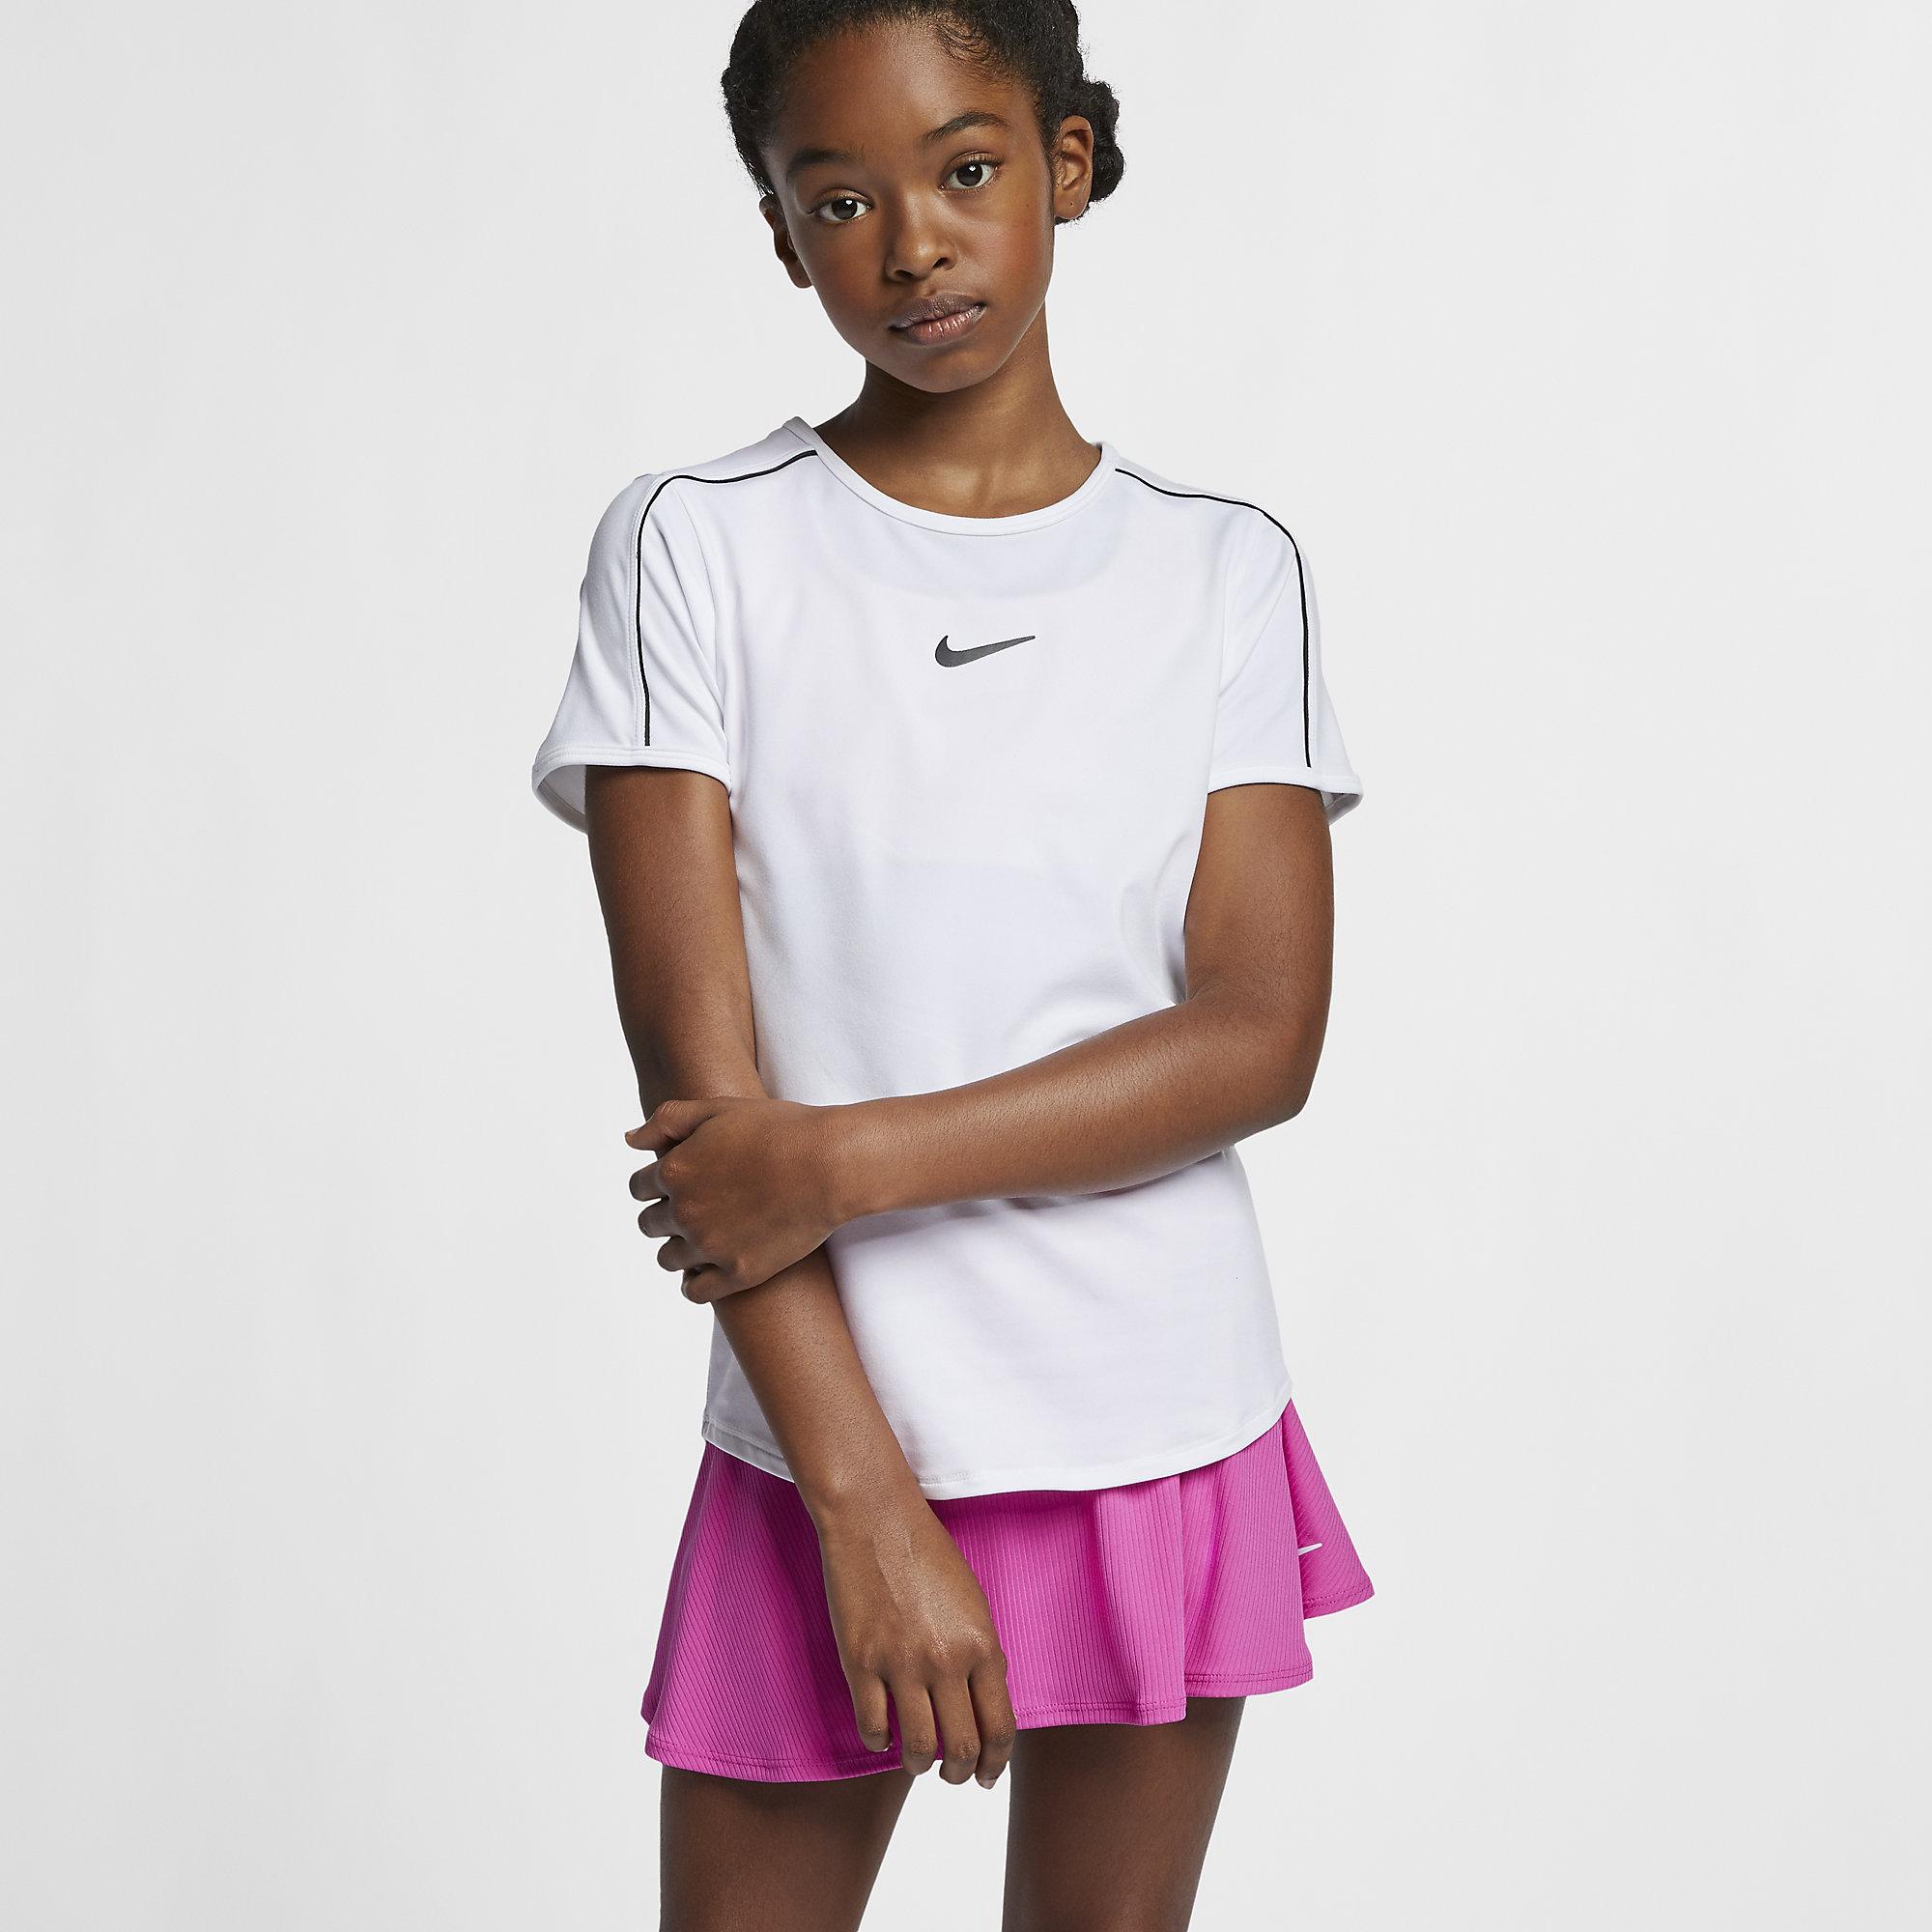 Nike Girls Dri-FIT Tennis Top - White - Tennisnuts.com